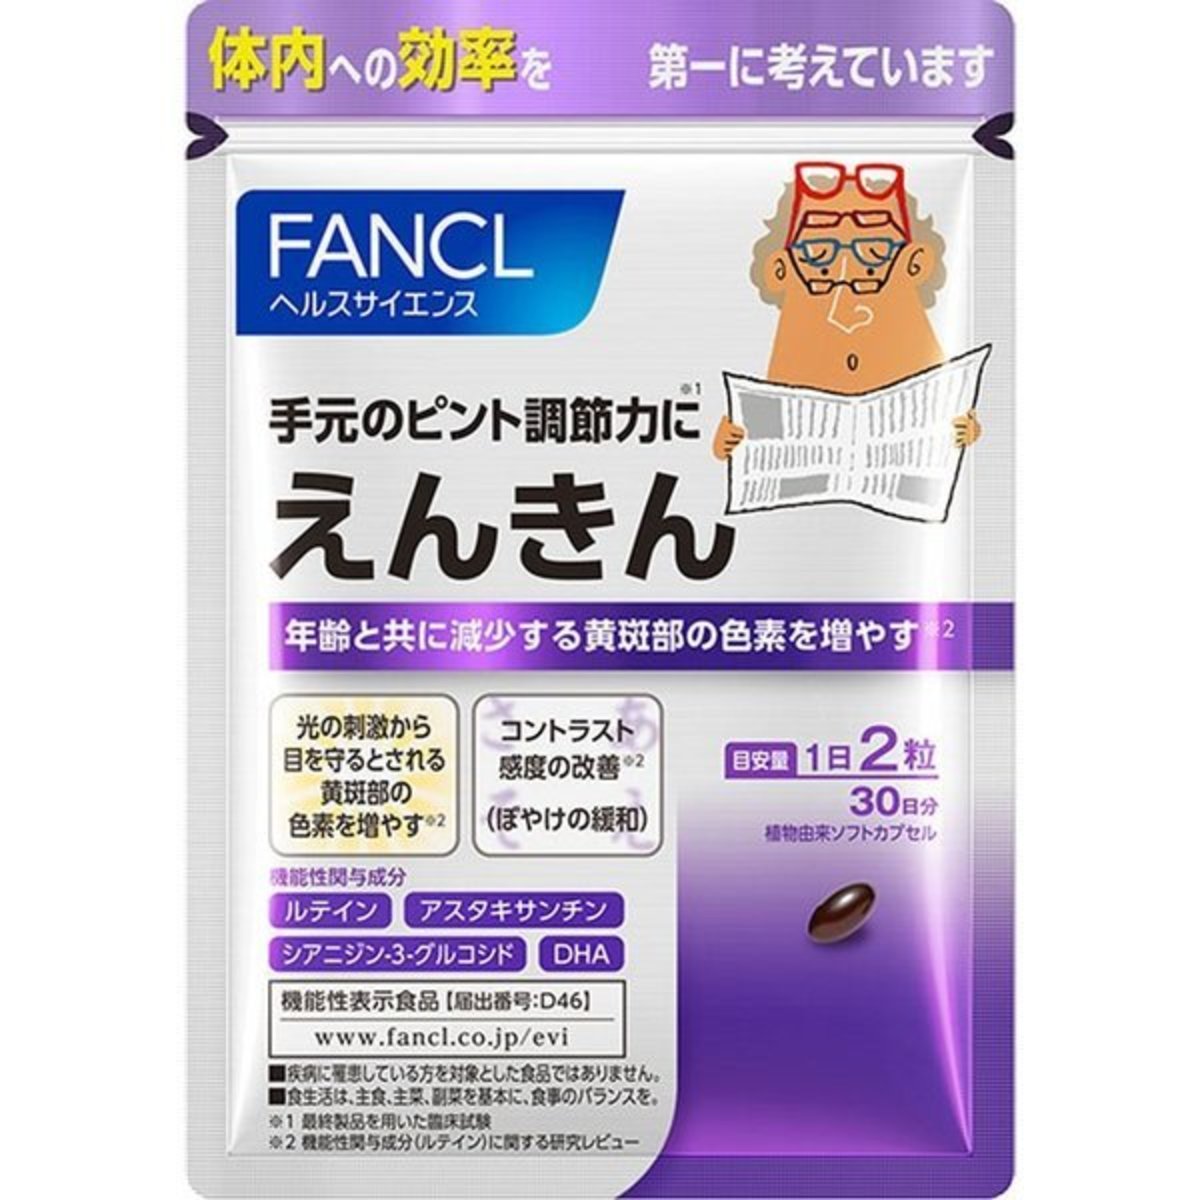 Fancl Enkin Supplement Focus Adjustment 60 Caplets 30 Days Parallel Imports Hktvmall Online Shopping